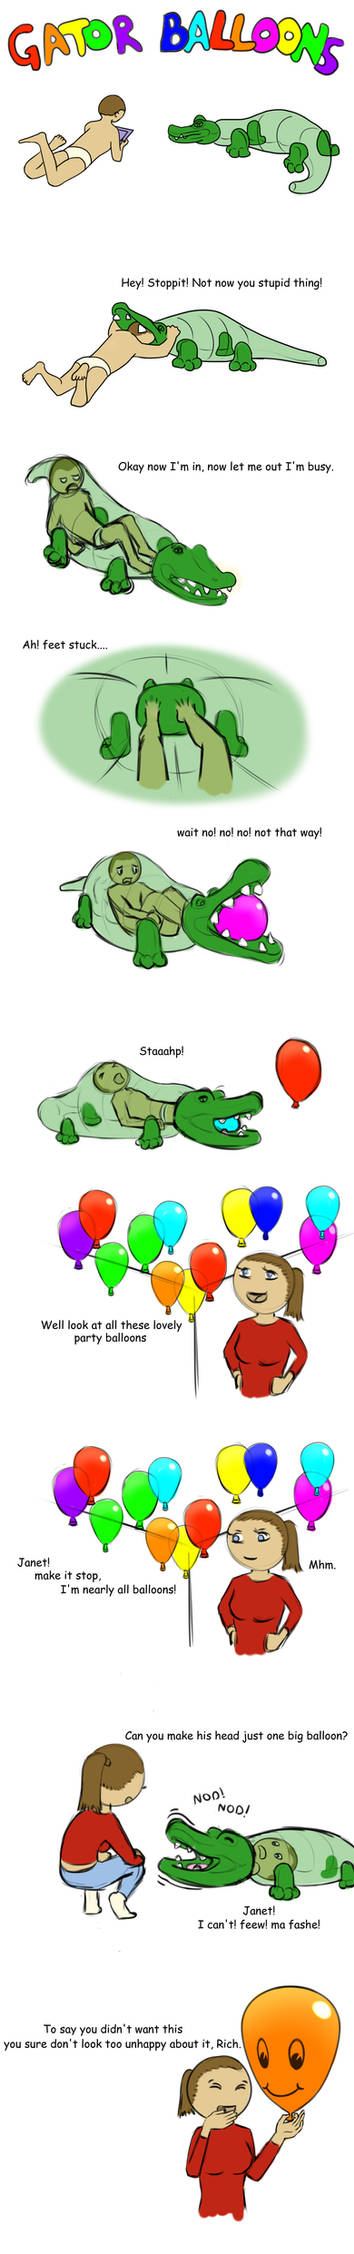 Gator Balloons